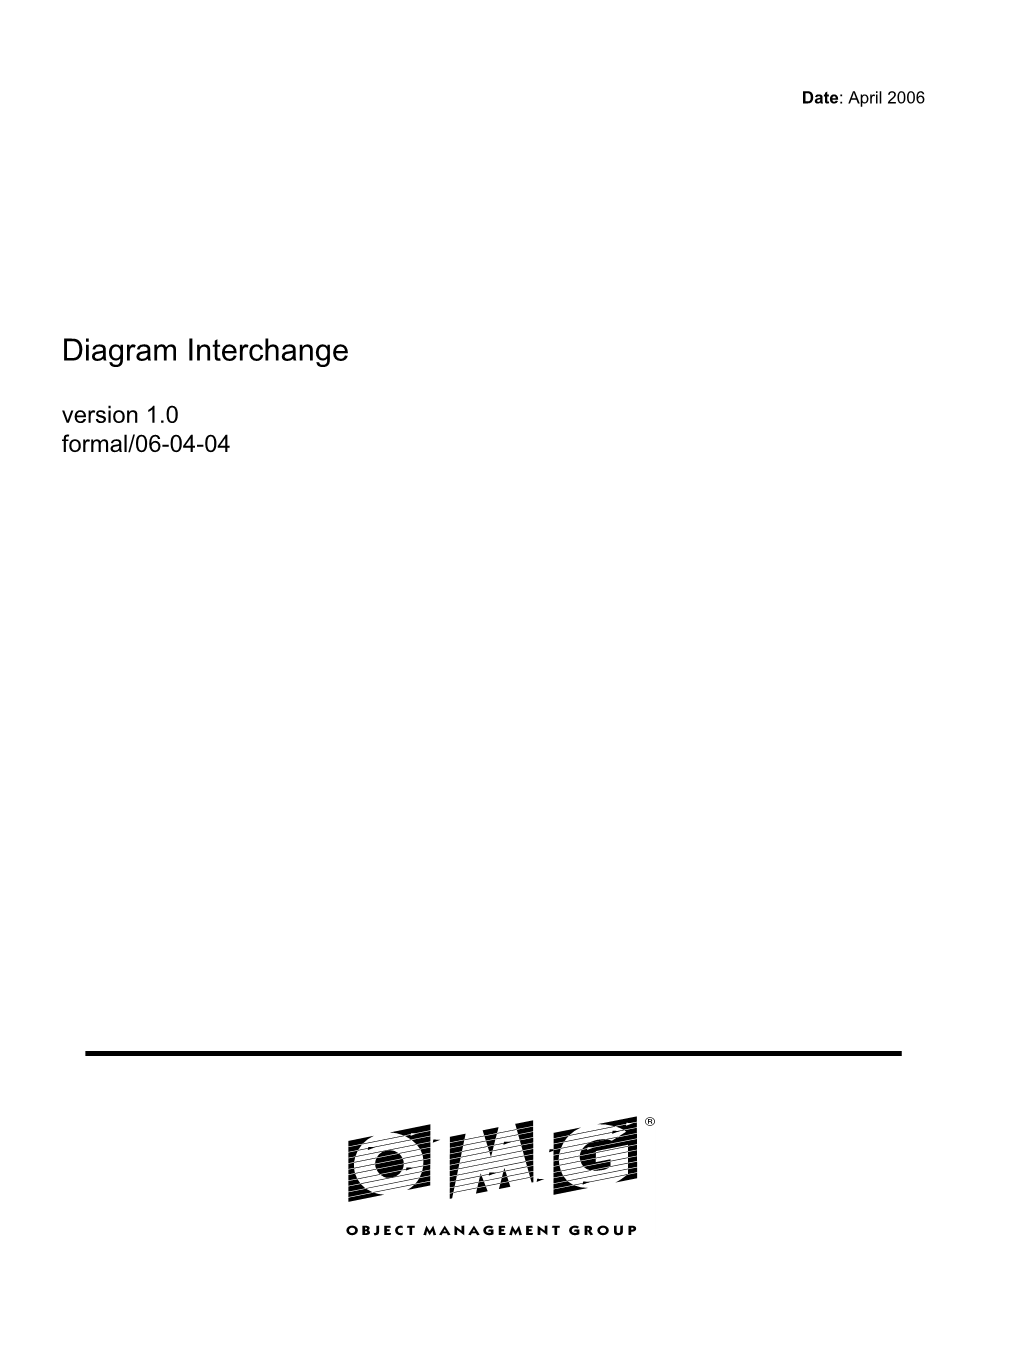 Diagram Interchange